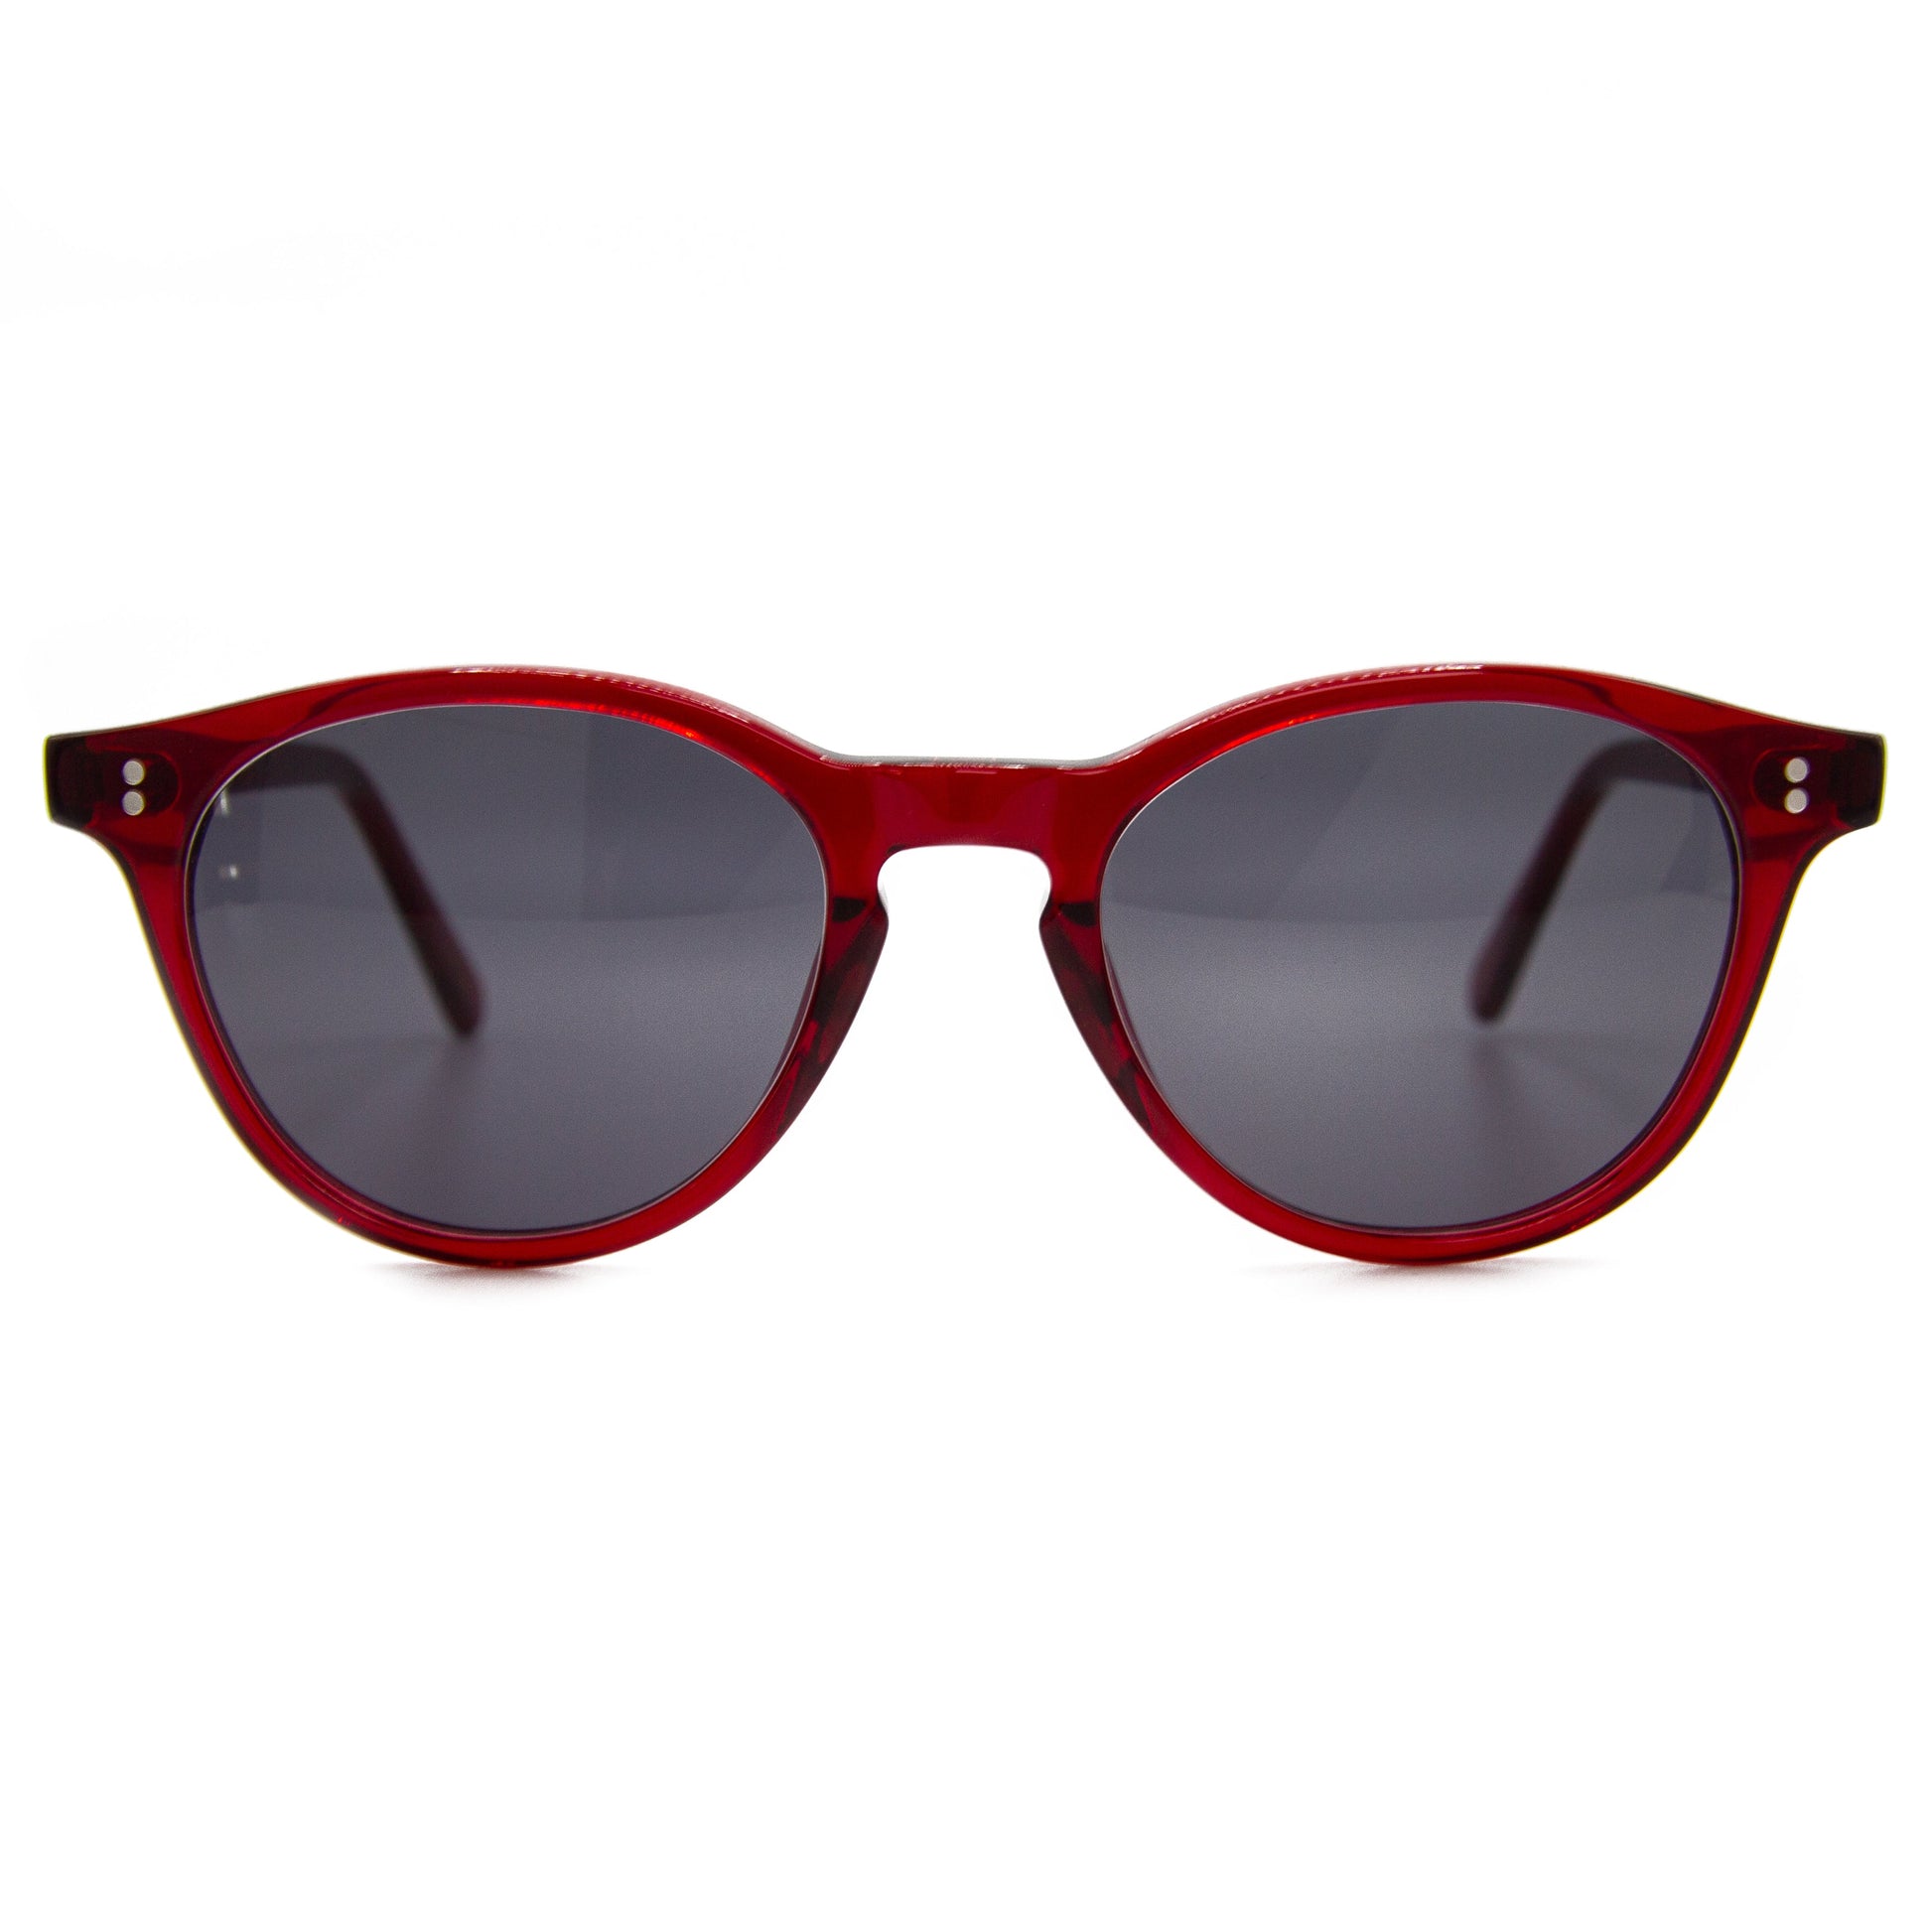 3 brothers - Chantal - Red - Prescription Sunglasses 